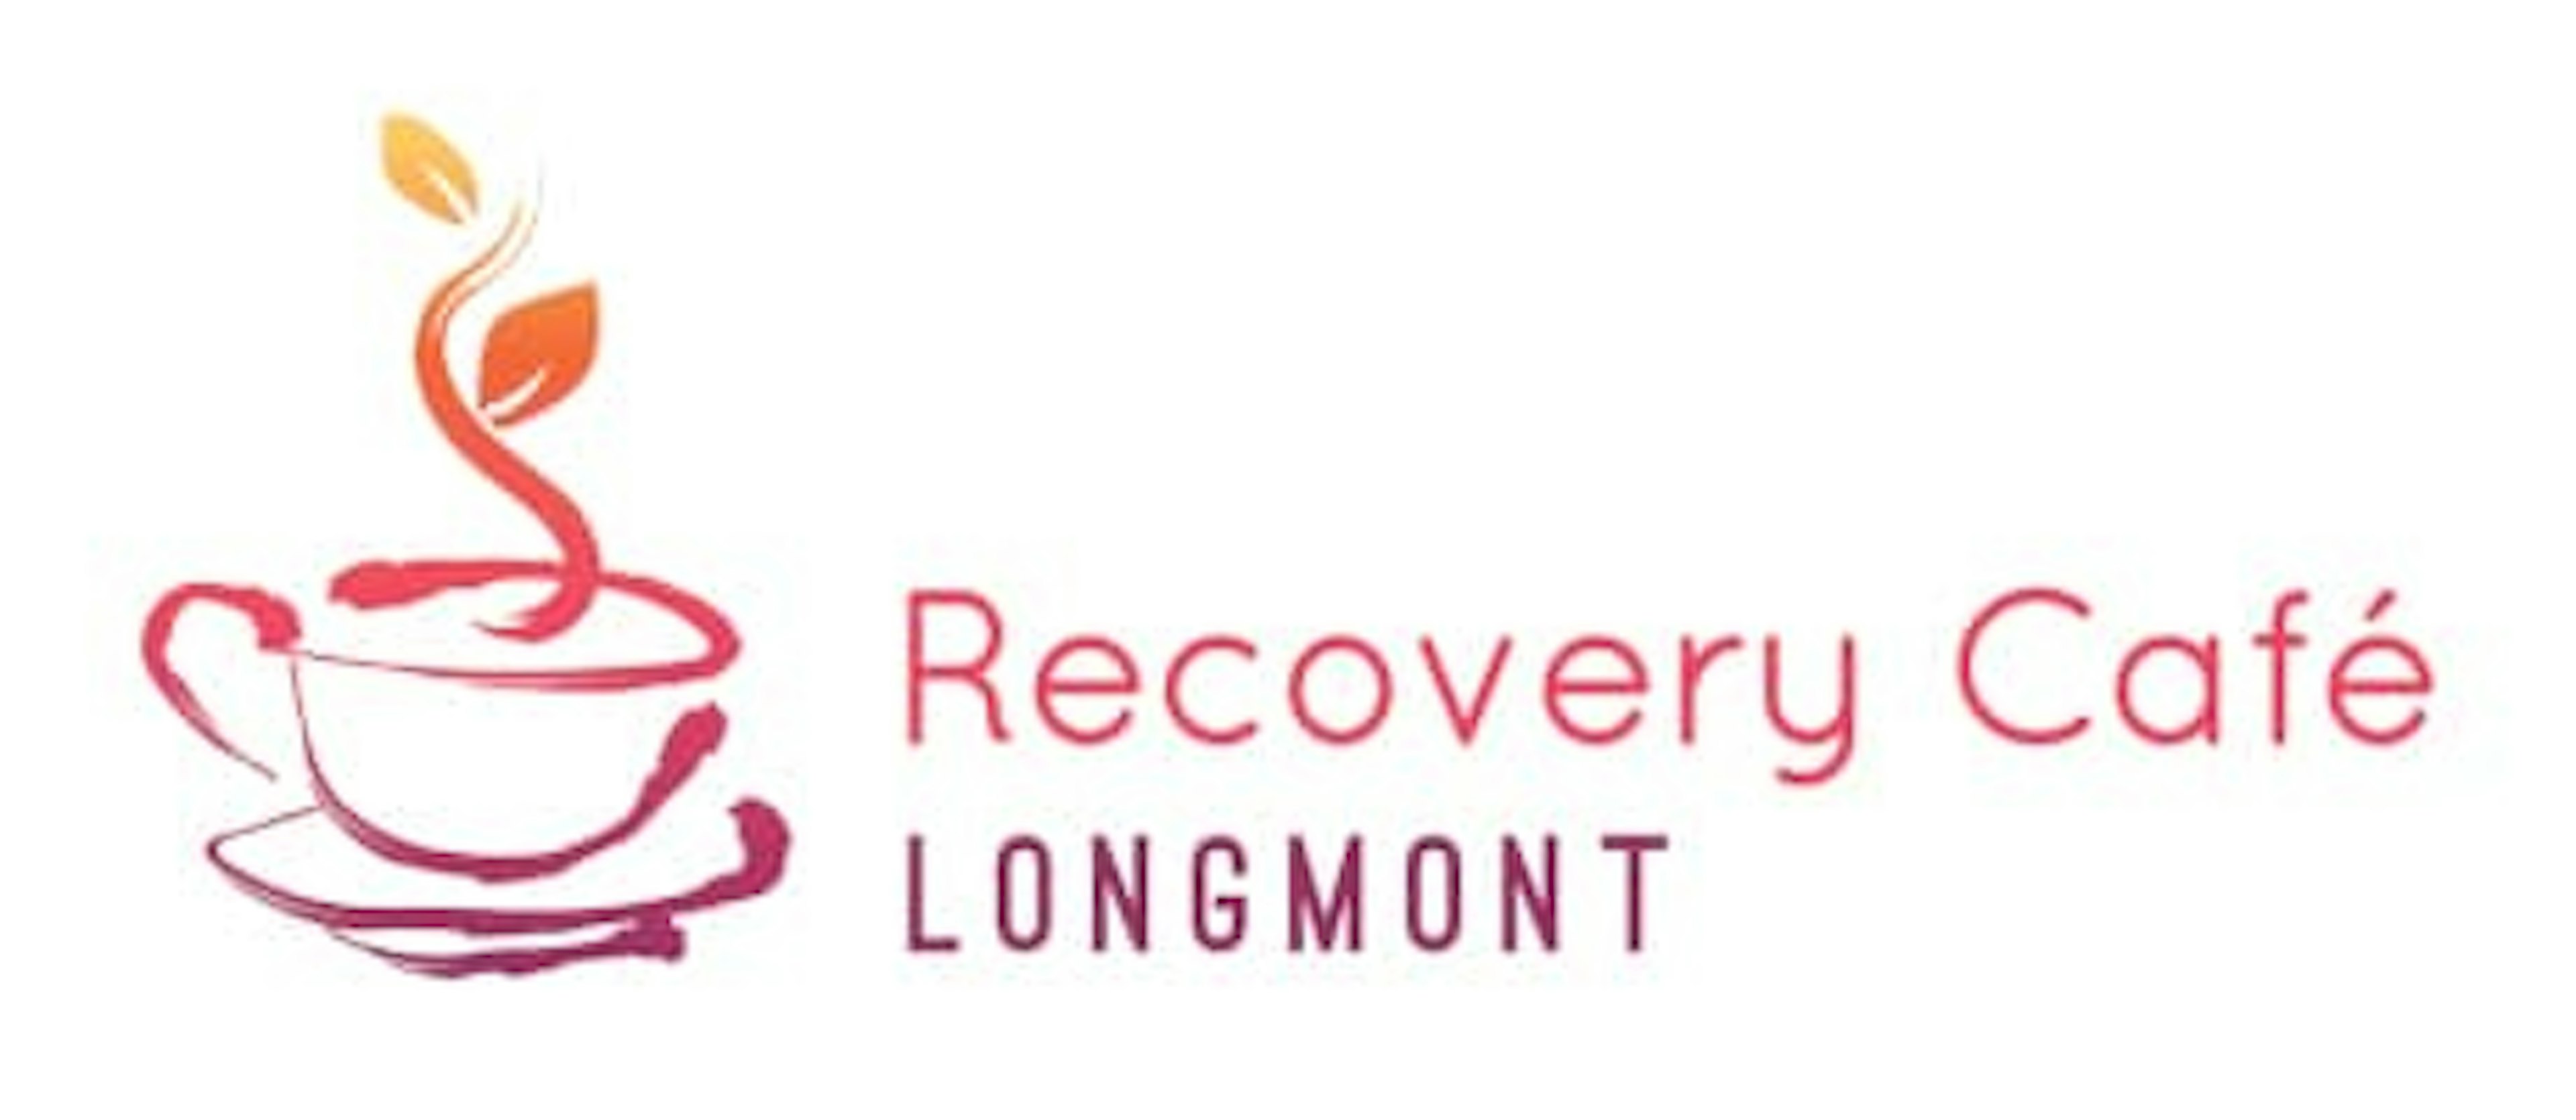 Recovery cafe longmont logo